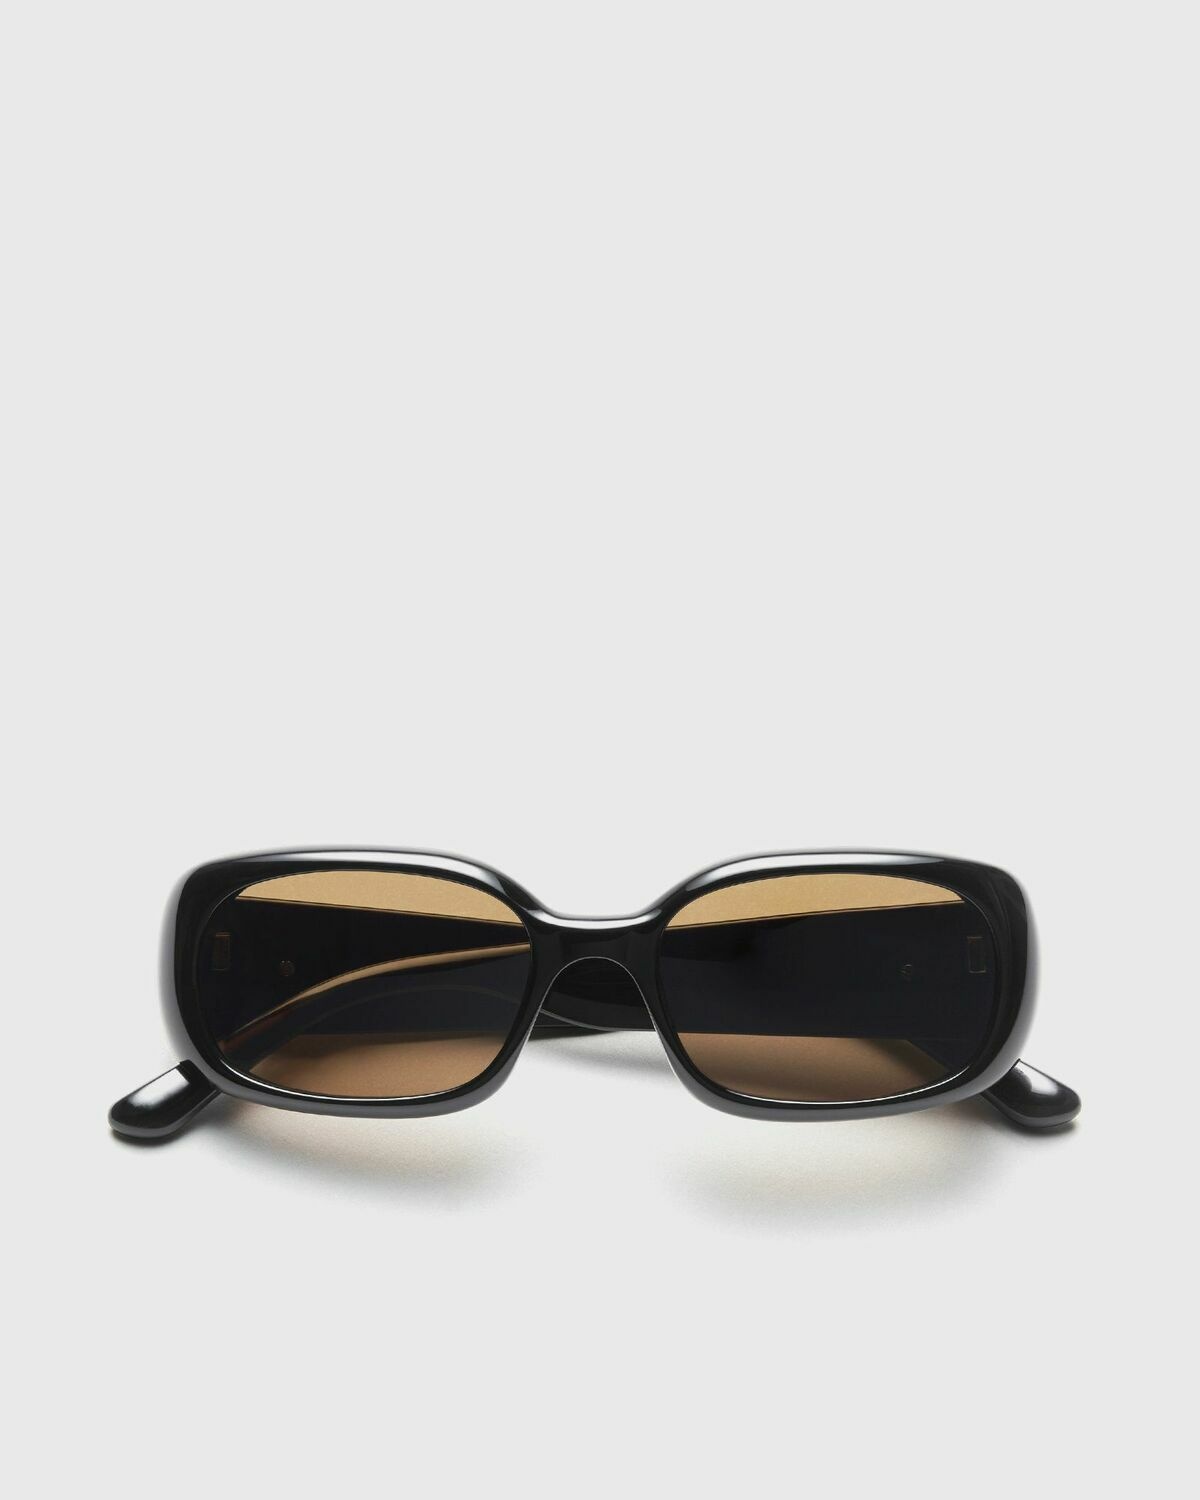 Chimi Eyewear Lax Black Sunglasses Black - Mens - Eyewear